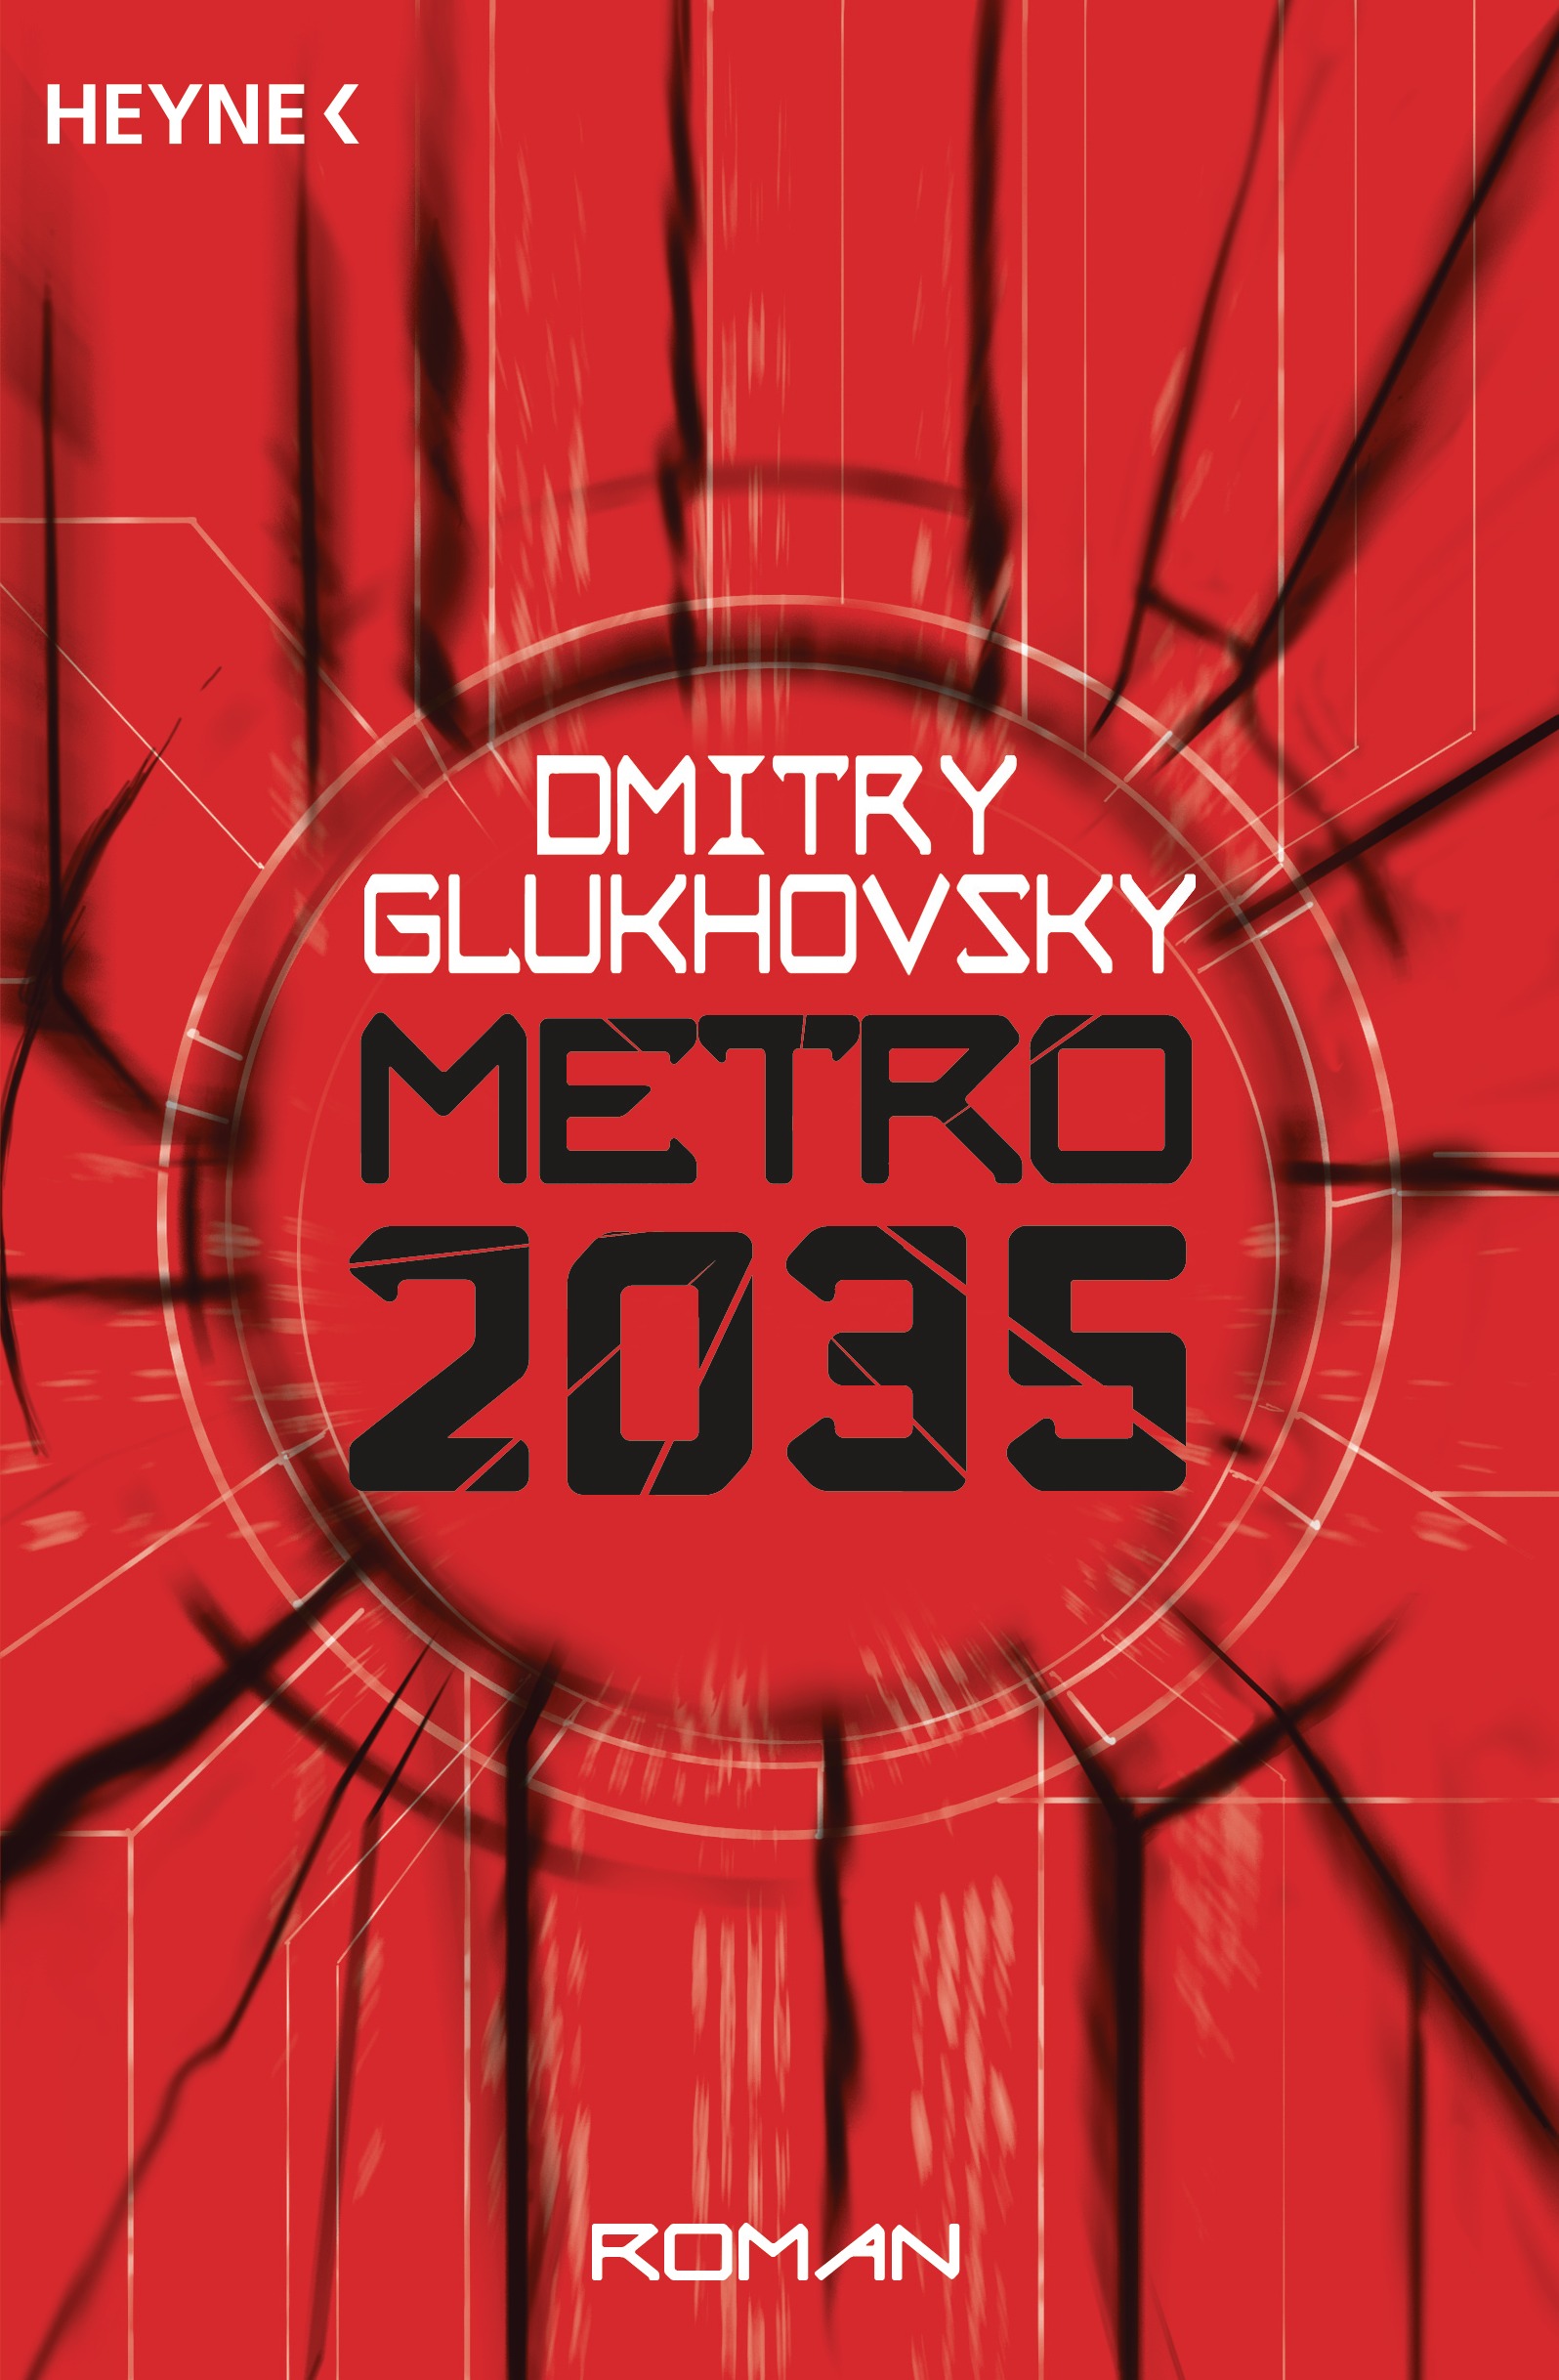 Dmitry Glukhovsky: Metro 2035: Roman (2016, Heyne Verlag)